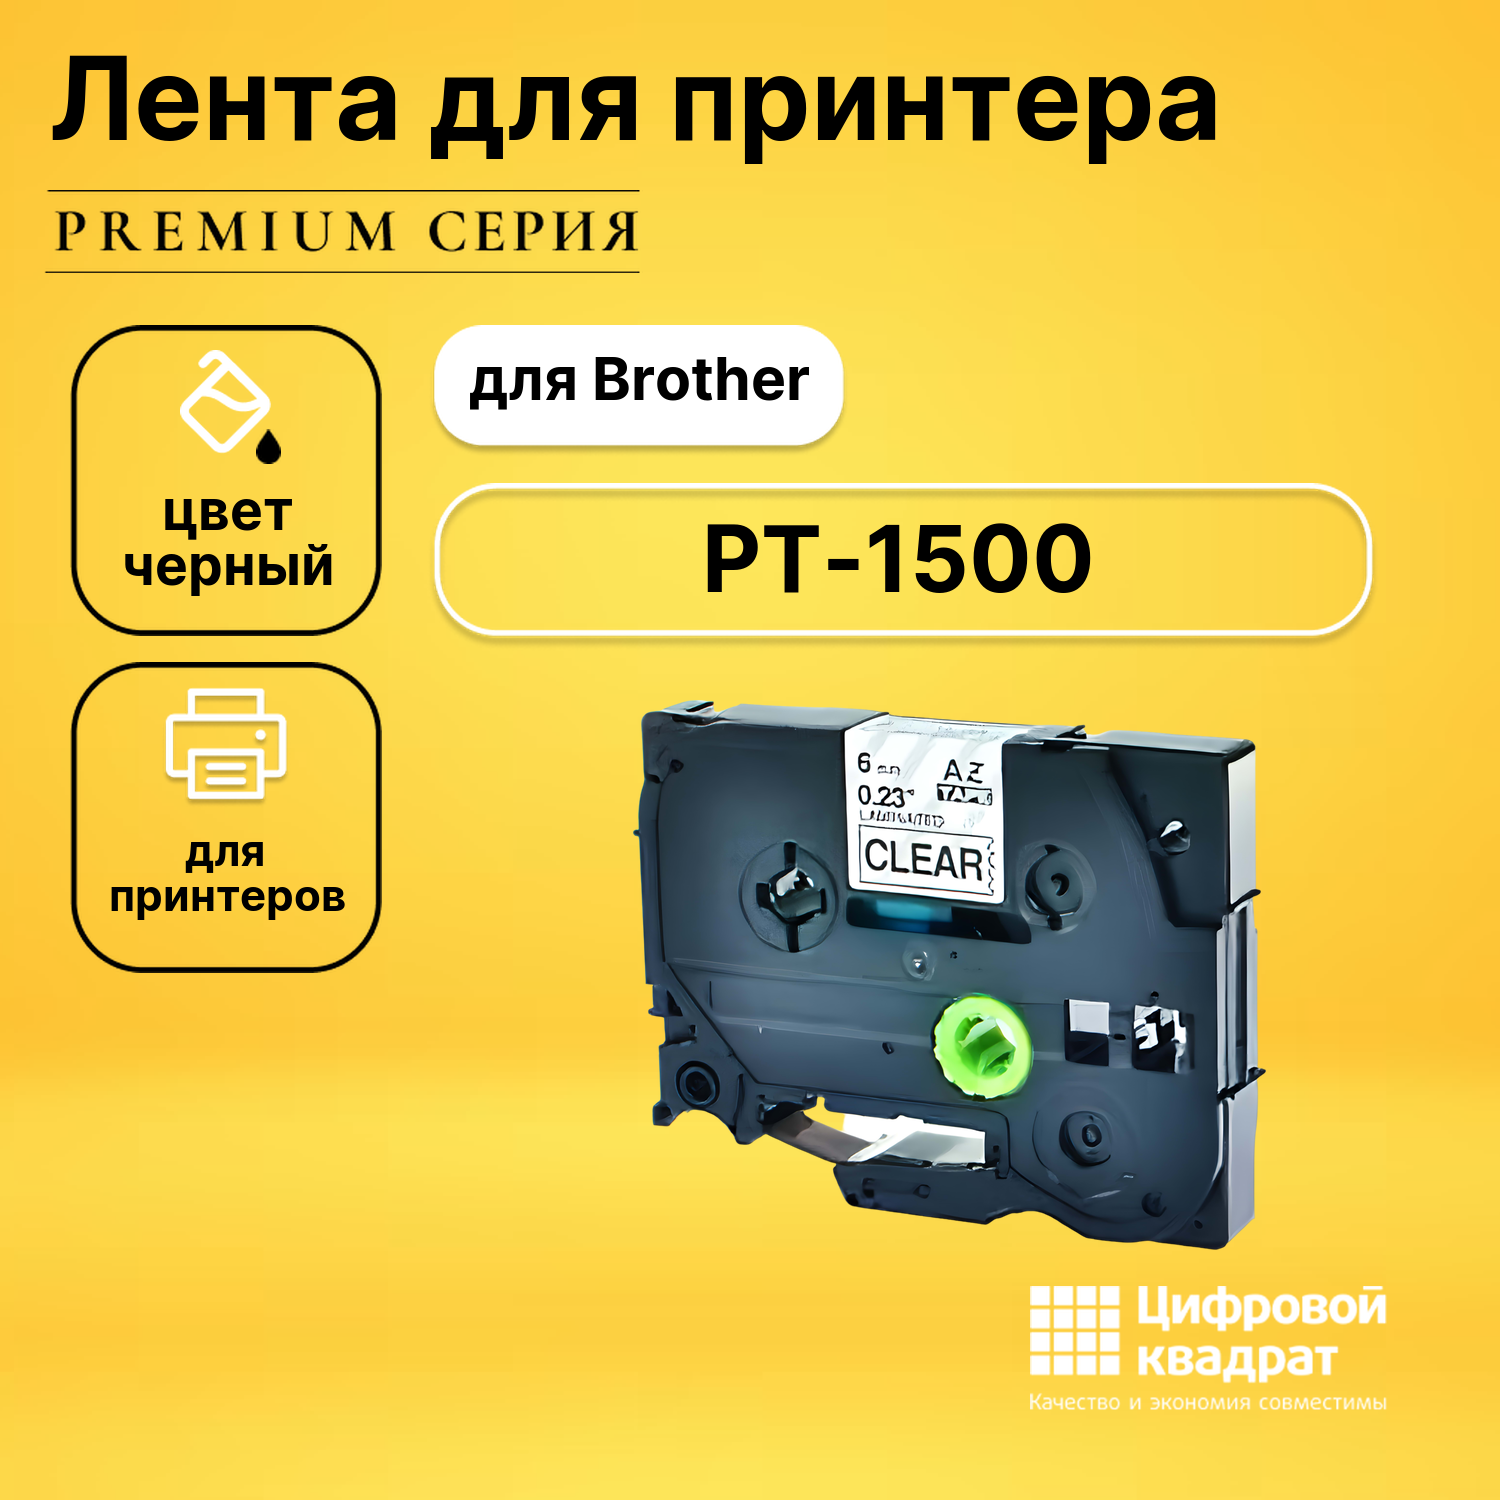 Лента для печати этикеток и наклеек для Brother PT-1500